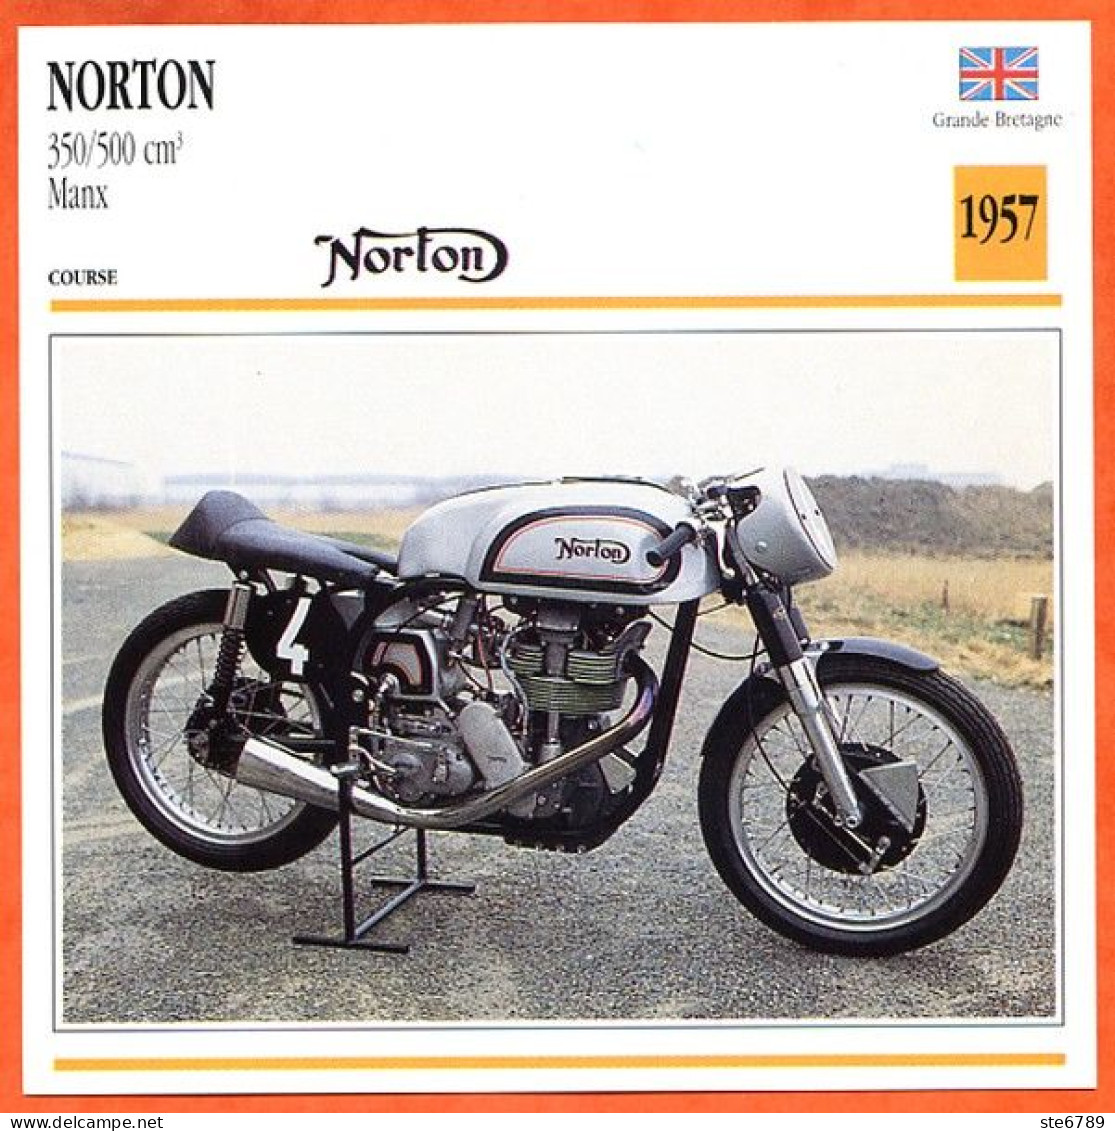 NORTON 350/500 Manx  1957 UK Fiche Technique Moto - Sports